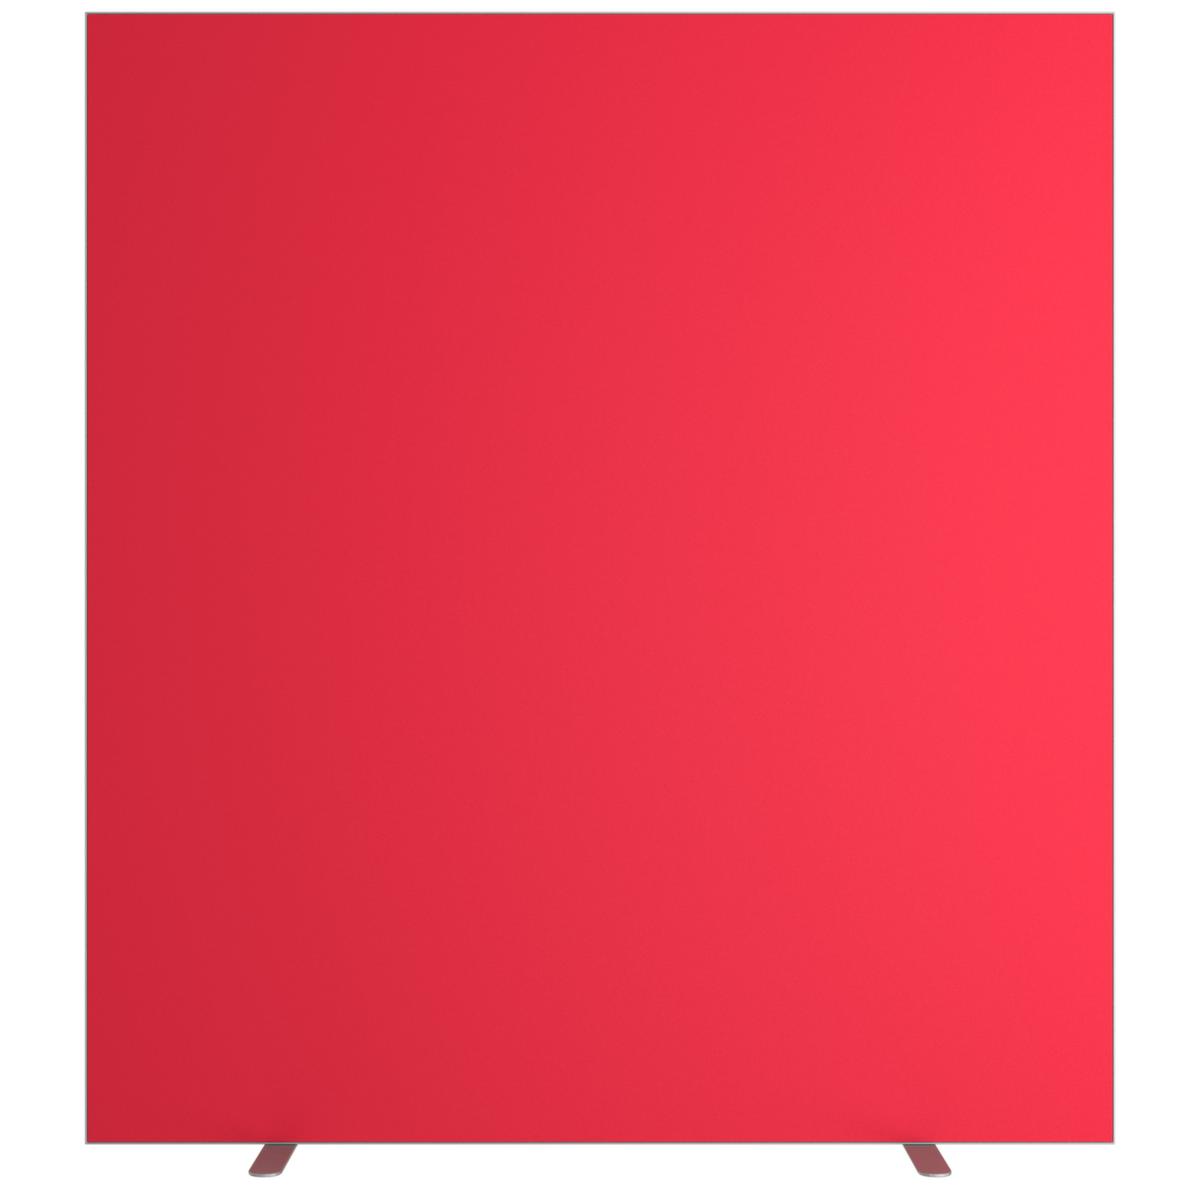 Paperflow Trennwand mit beidseitigem Stoffbezug, Höhe x Breite 1740 x 1600 mm, Wand rot Standard 1 ZOOM